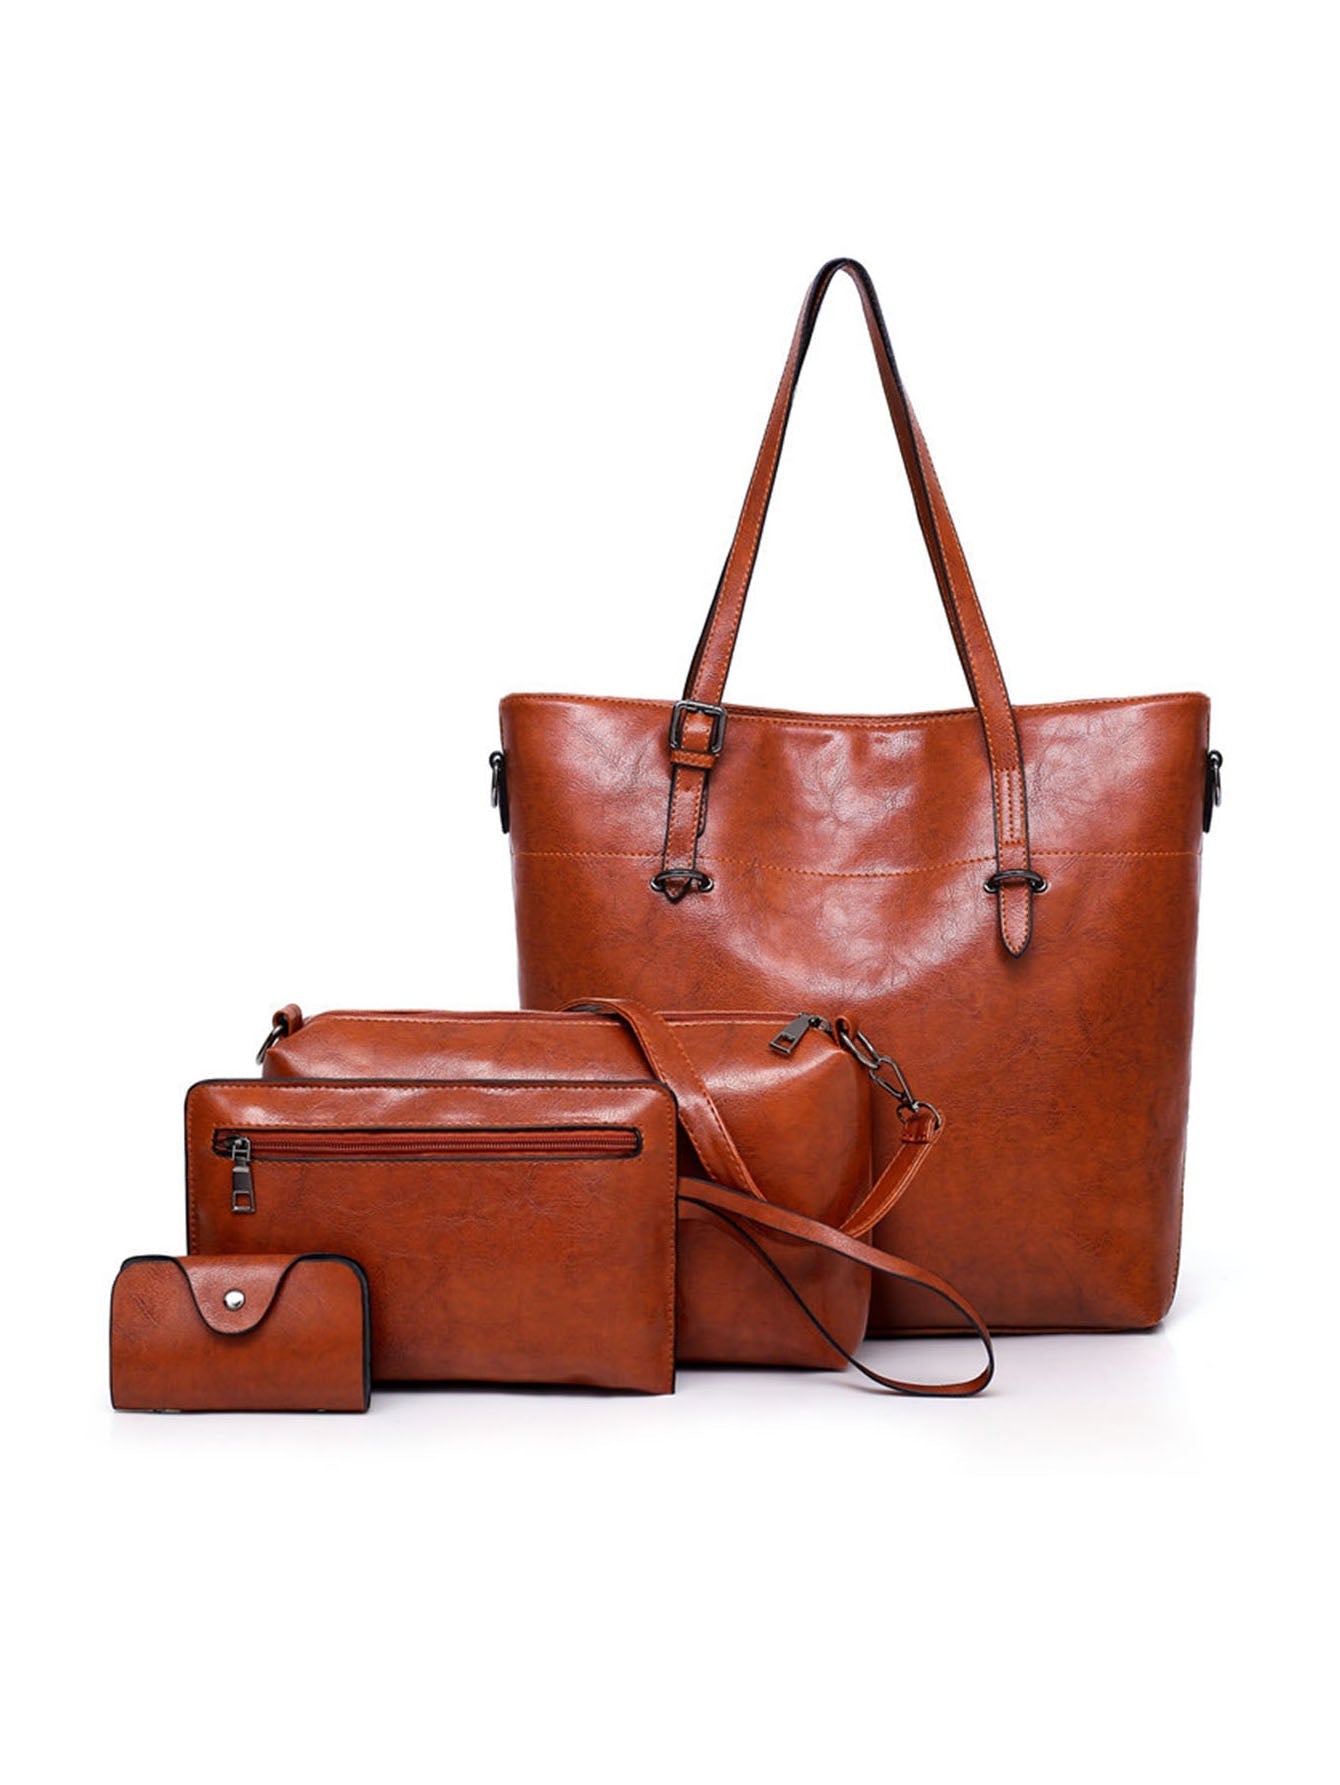 Women 4 Pcs/set Bags Casual Leather Wallets Purses and Handbags Crossbody Bags Retro Satchel Shoulder Tote Bag Messenger Bags Sai Feel